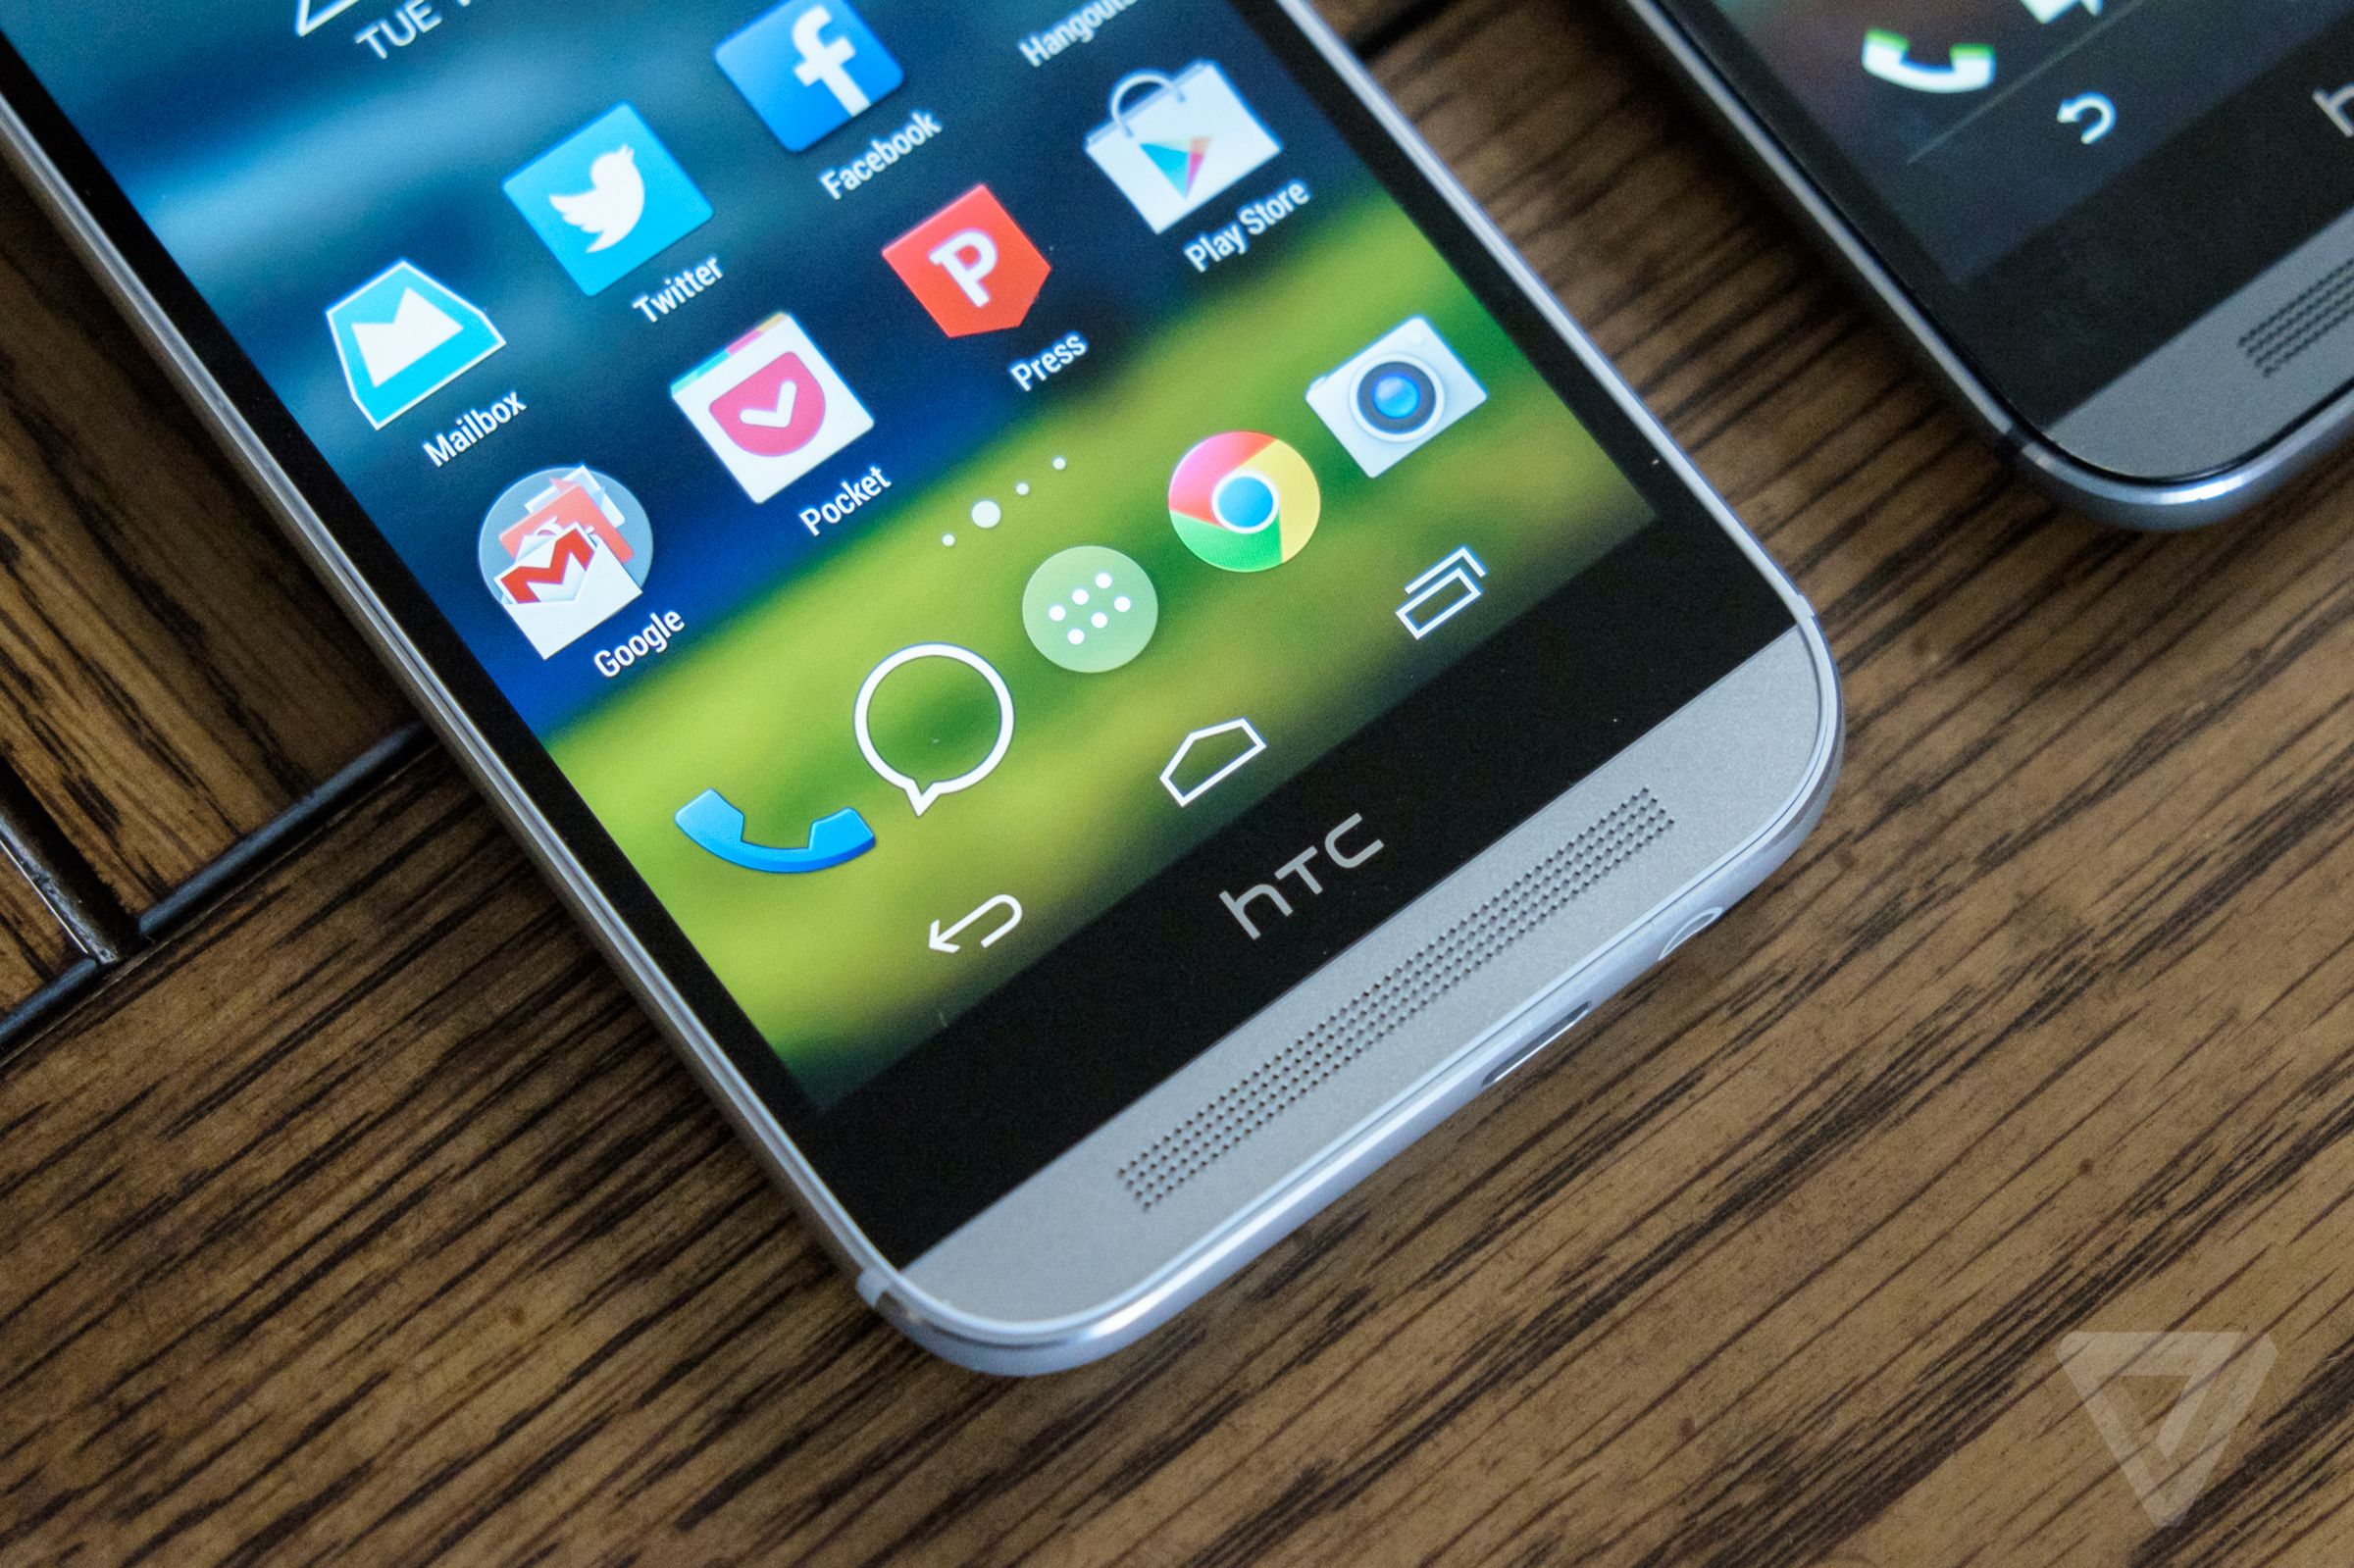 HTC One Google Play Edition photos